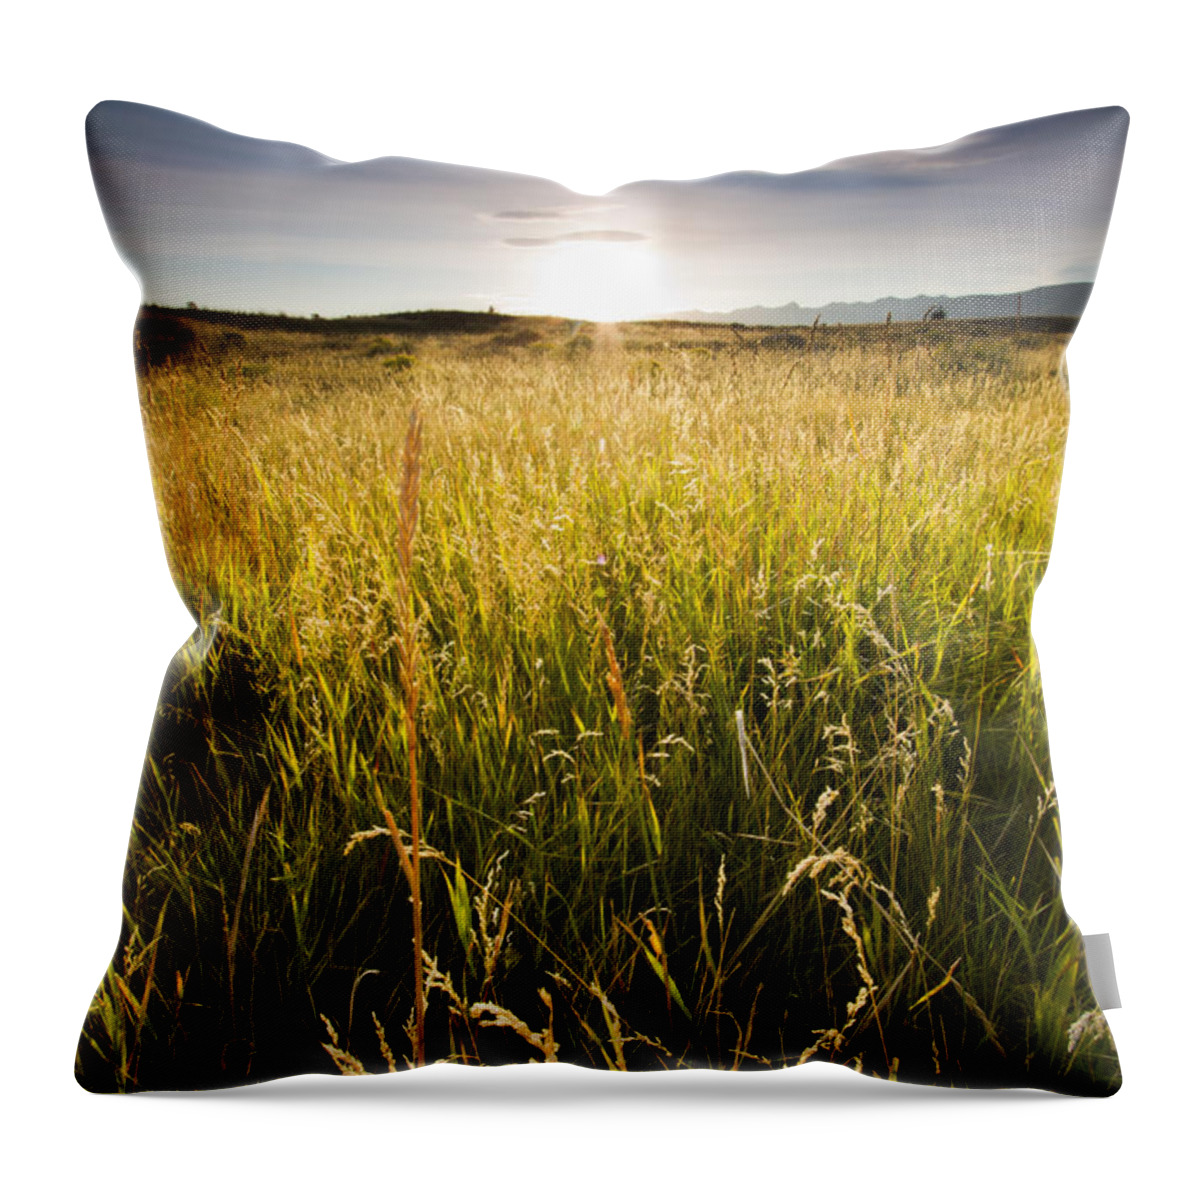 Grass Sunset Throw Pillow featuring the photograph Montana Sunset by Dustin K Ryan